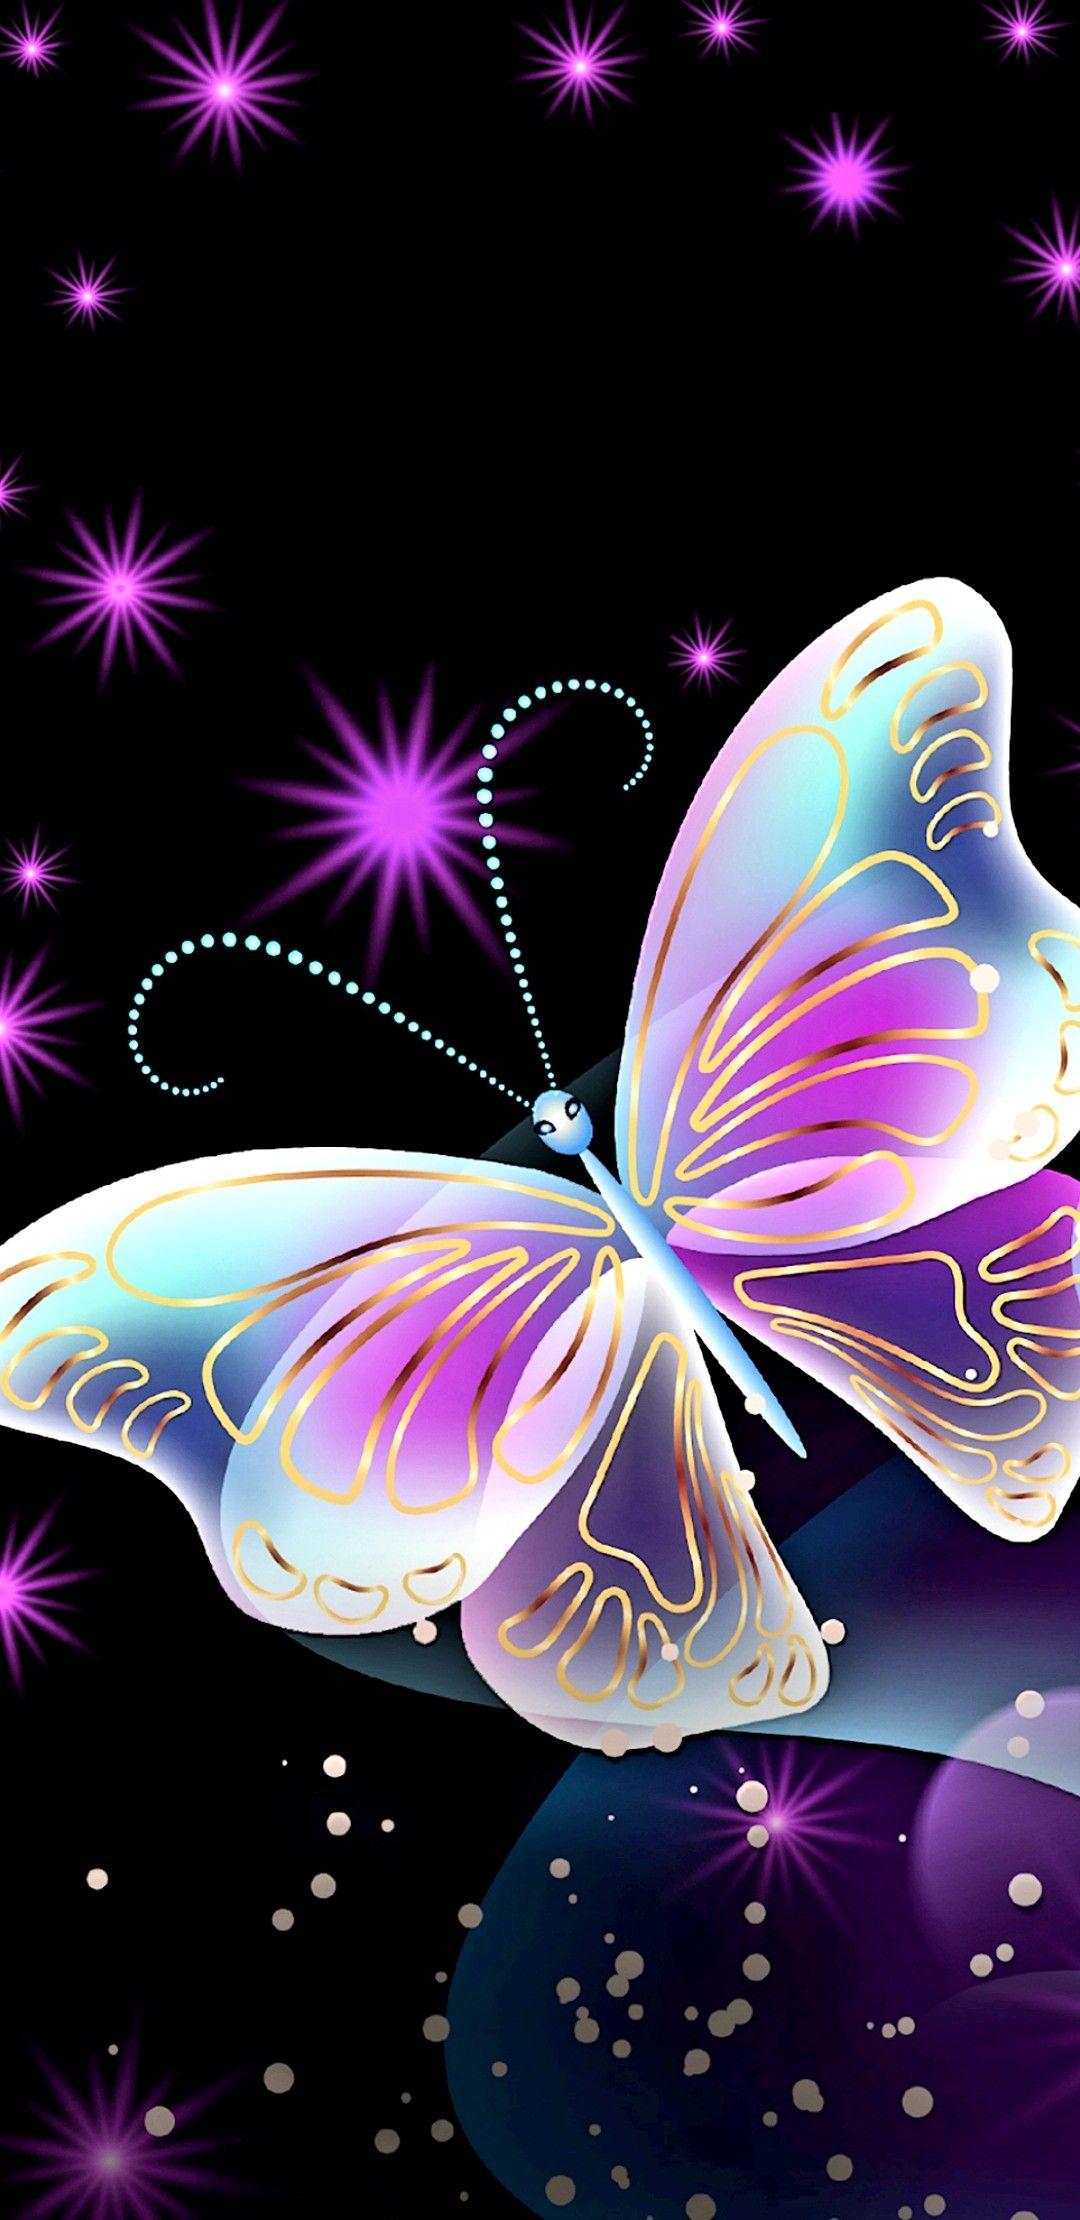 Beautiful Butterfly. iPhones Wallpaper!. Butterfly wallpaper